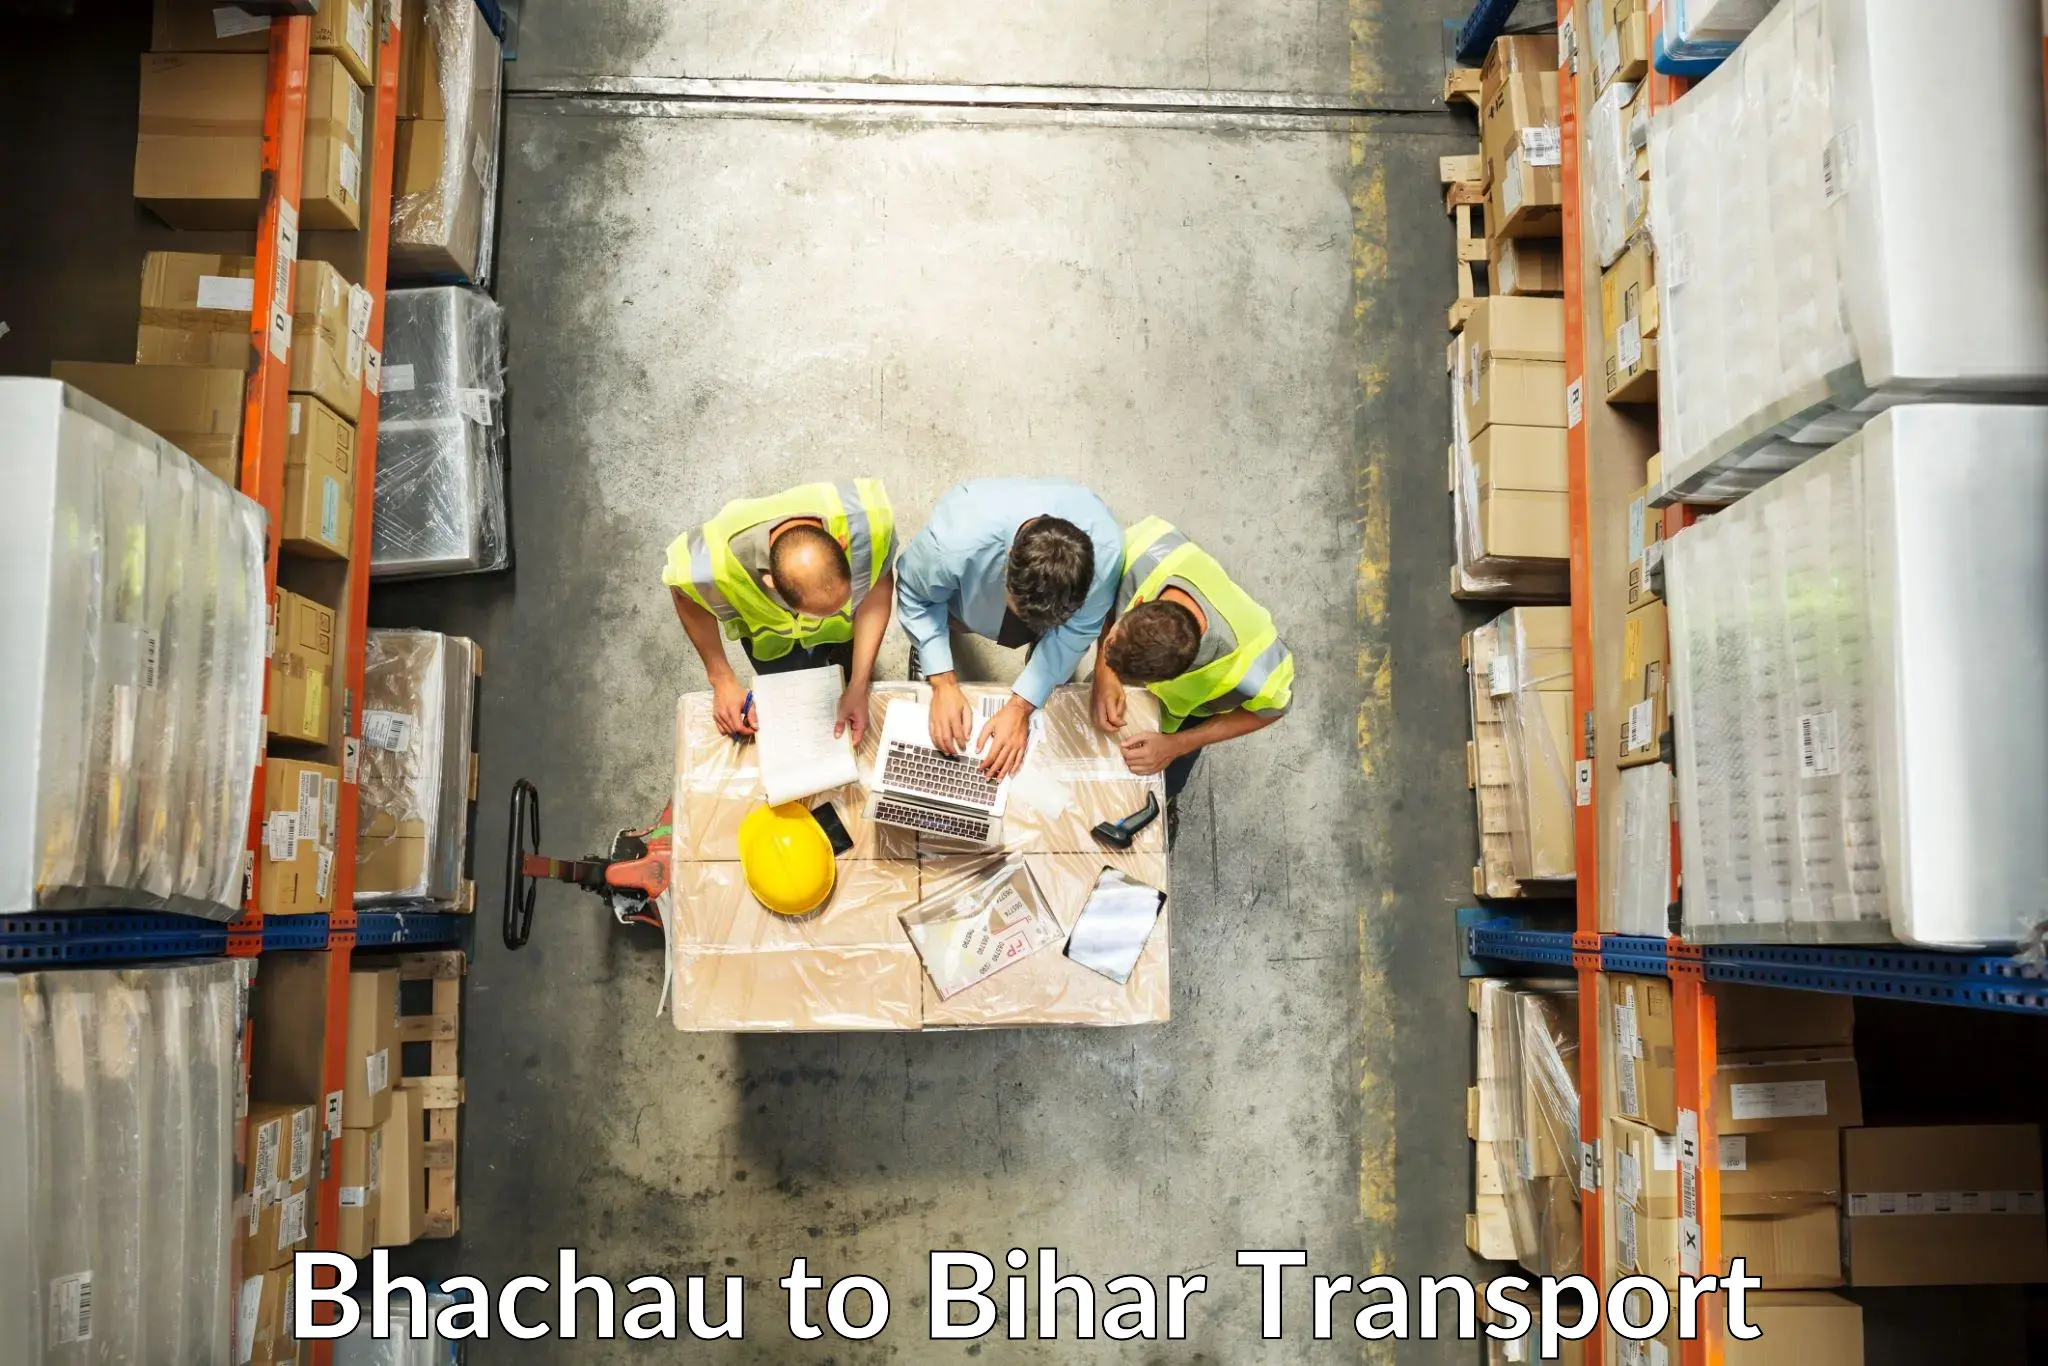 Truck transport companies in India Bhachau to Saharsa